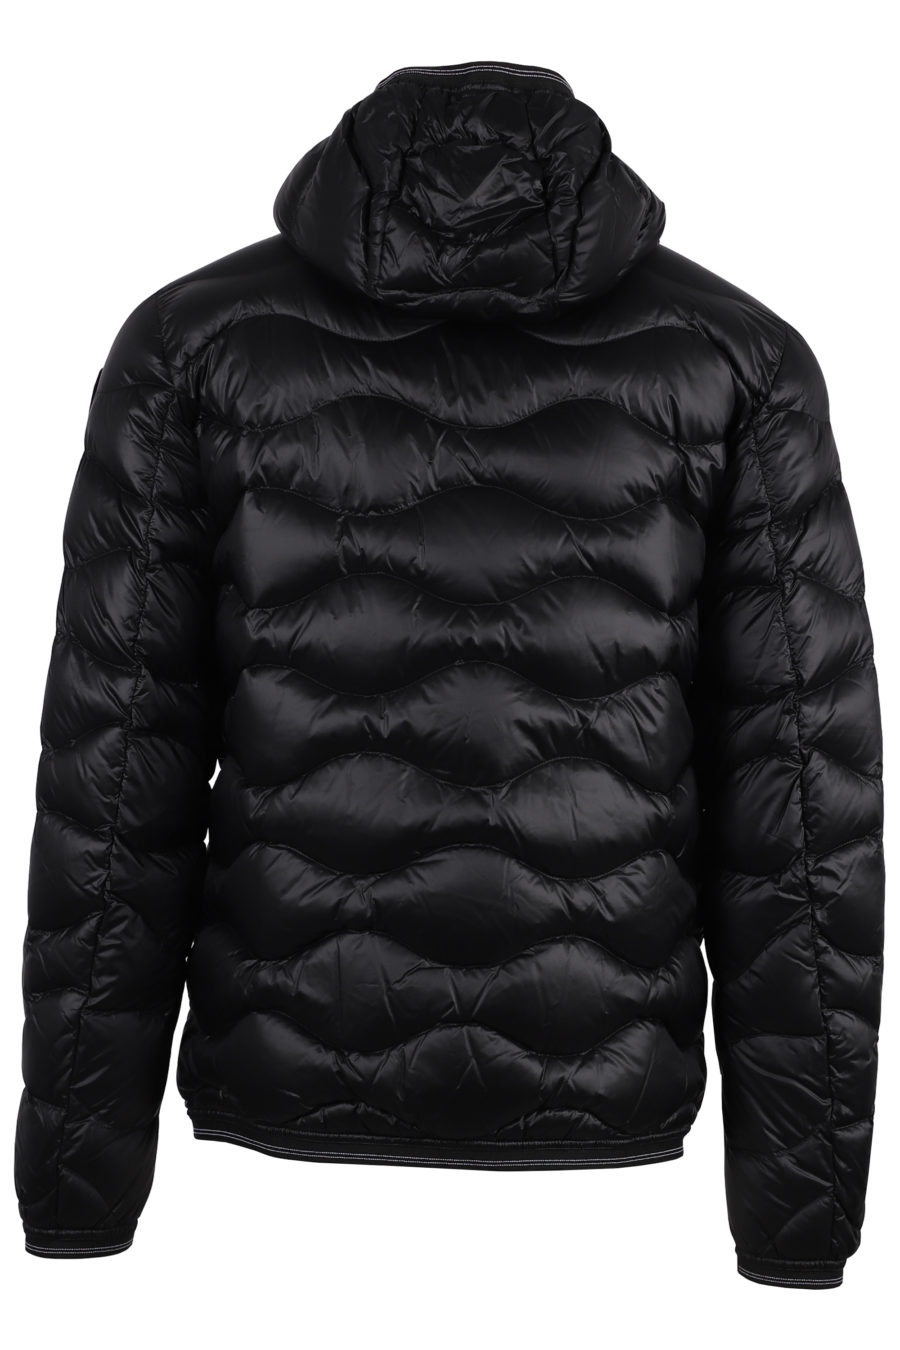 Black jacket with waves - IMG 1280